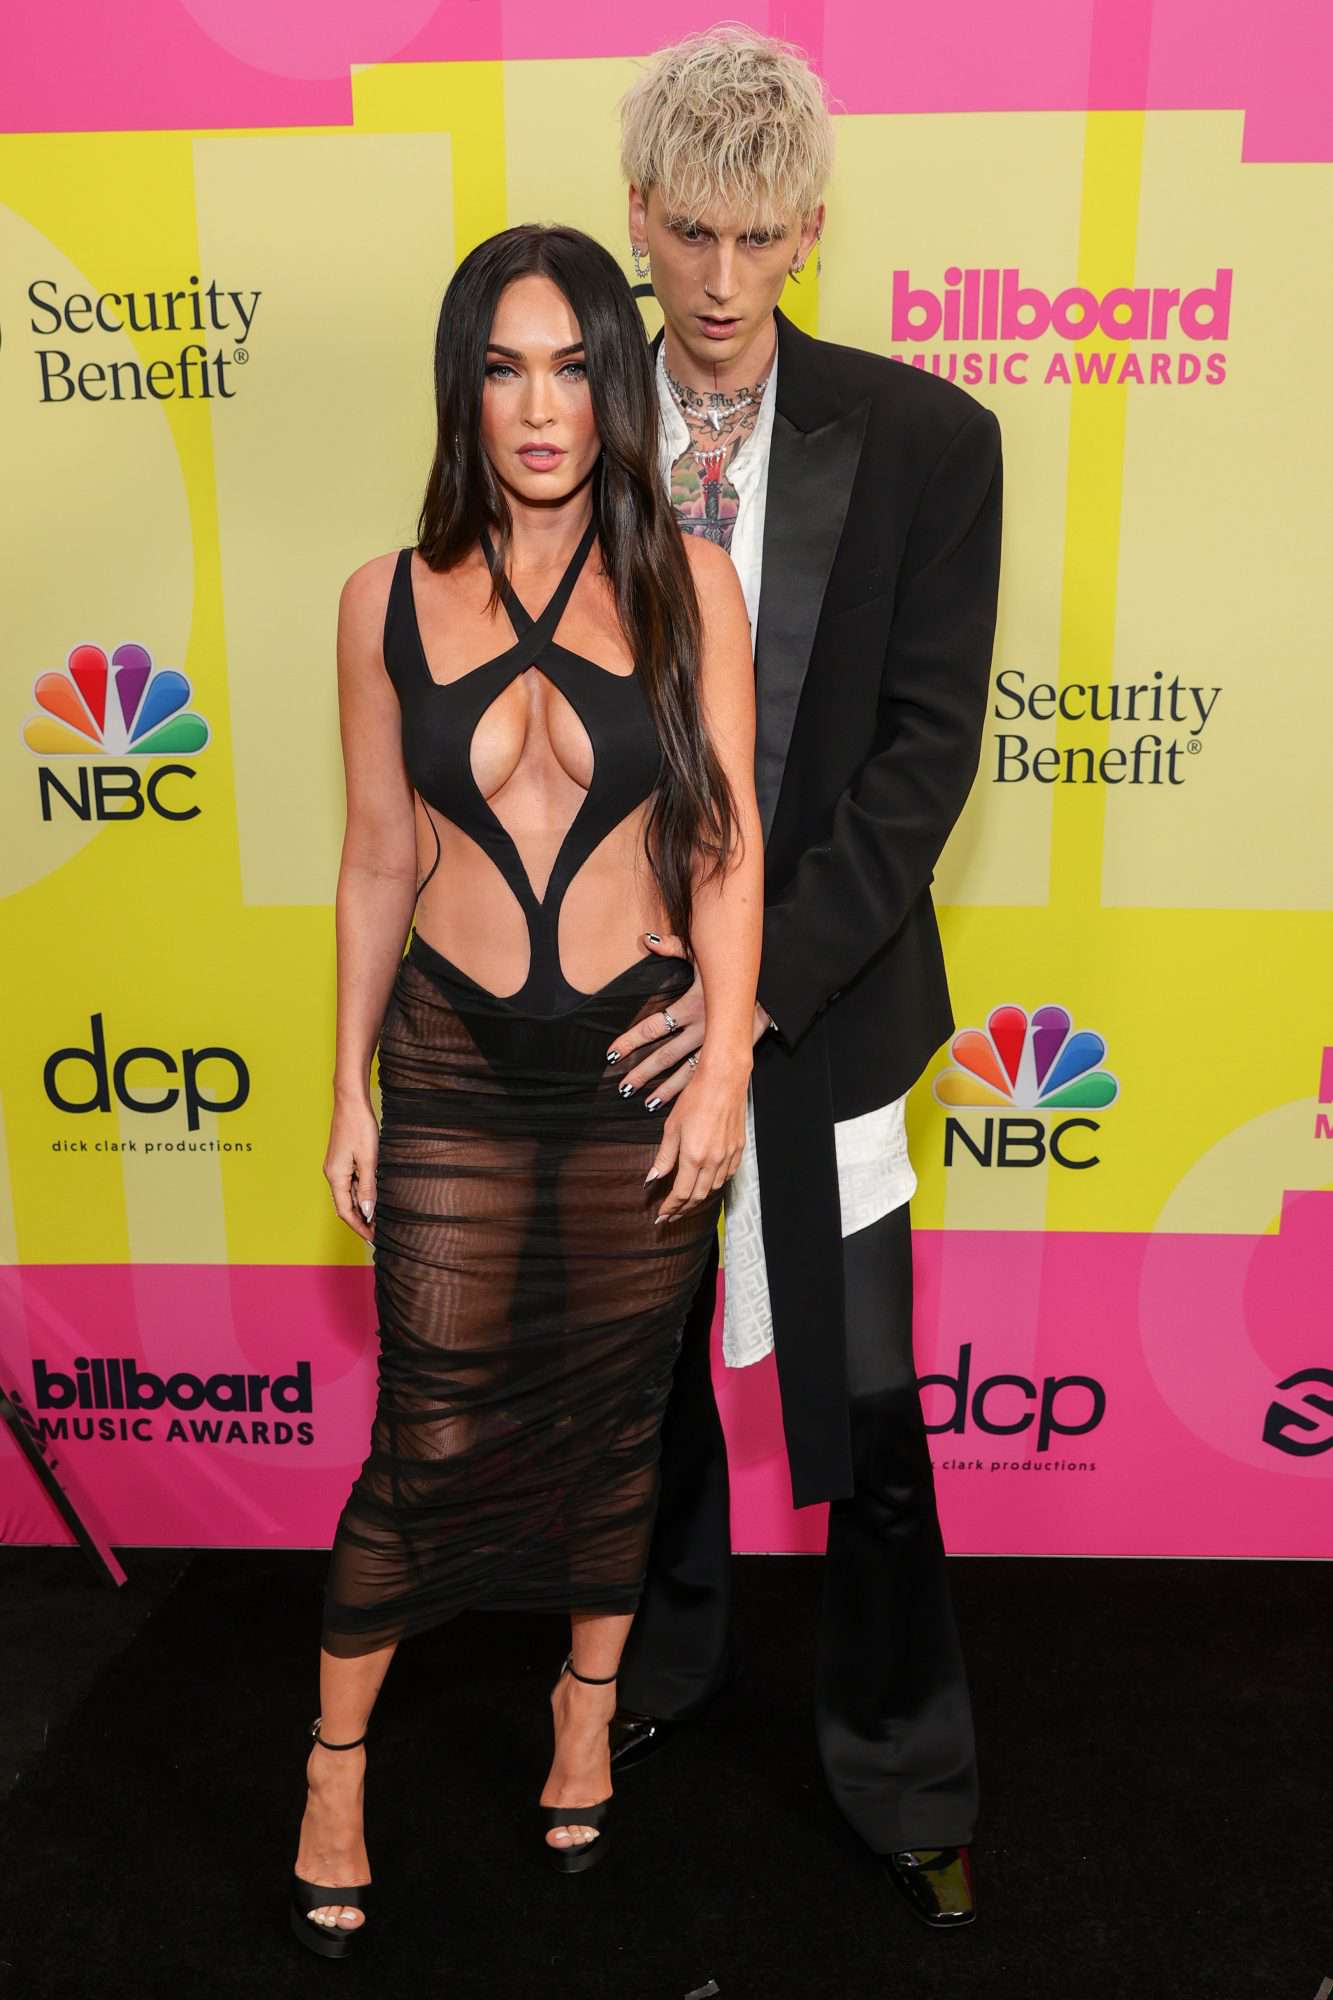 Megan Fox Wears Risqué Gown Walking 2021 BBMAs Red Carpet with Machine Gun Kelly | PEOPLE.com